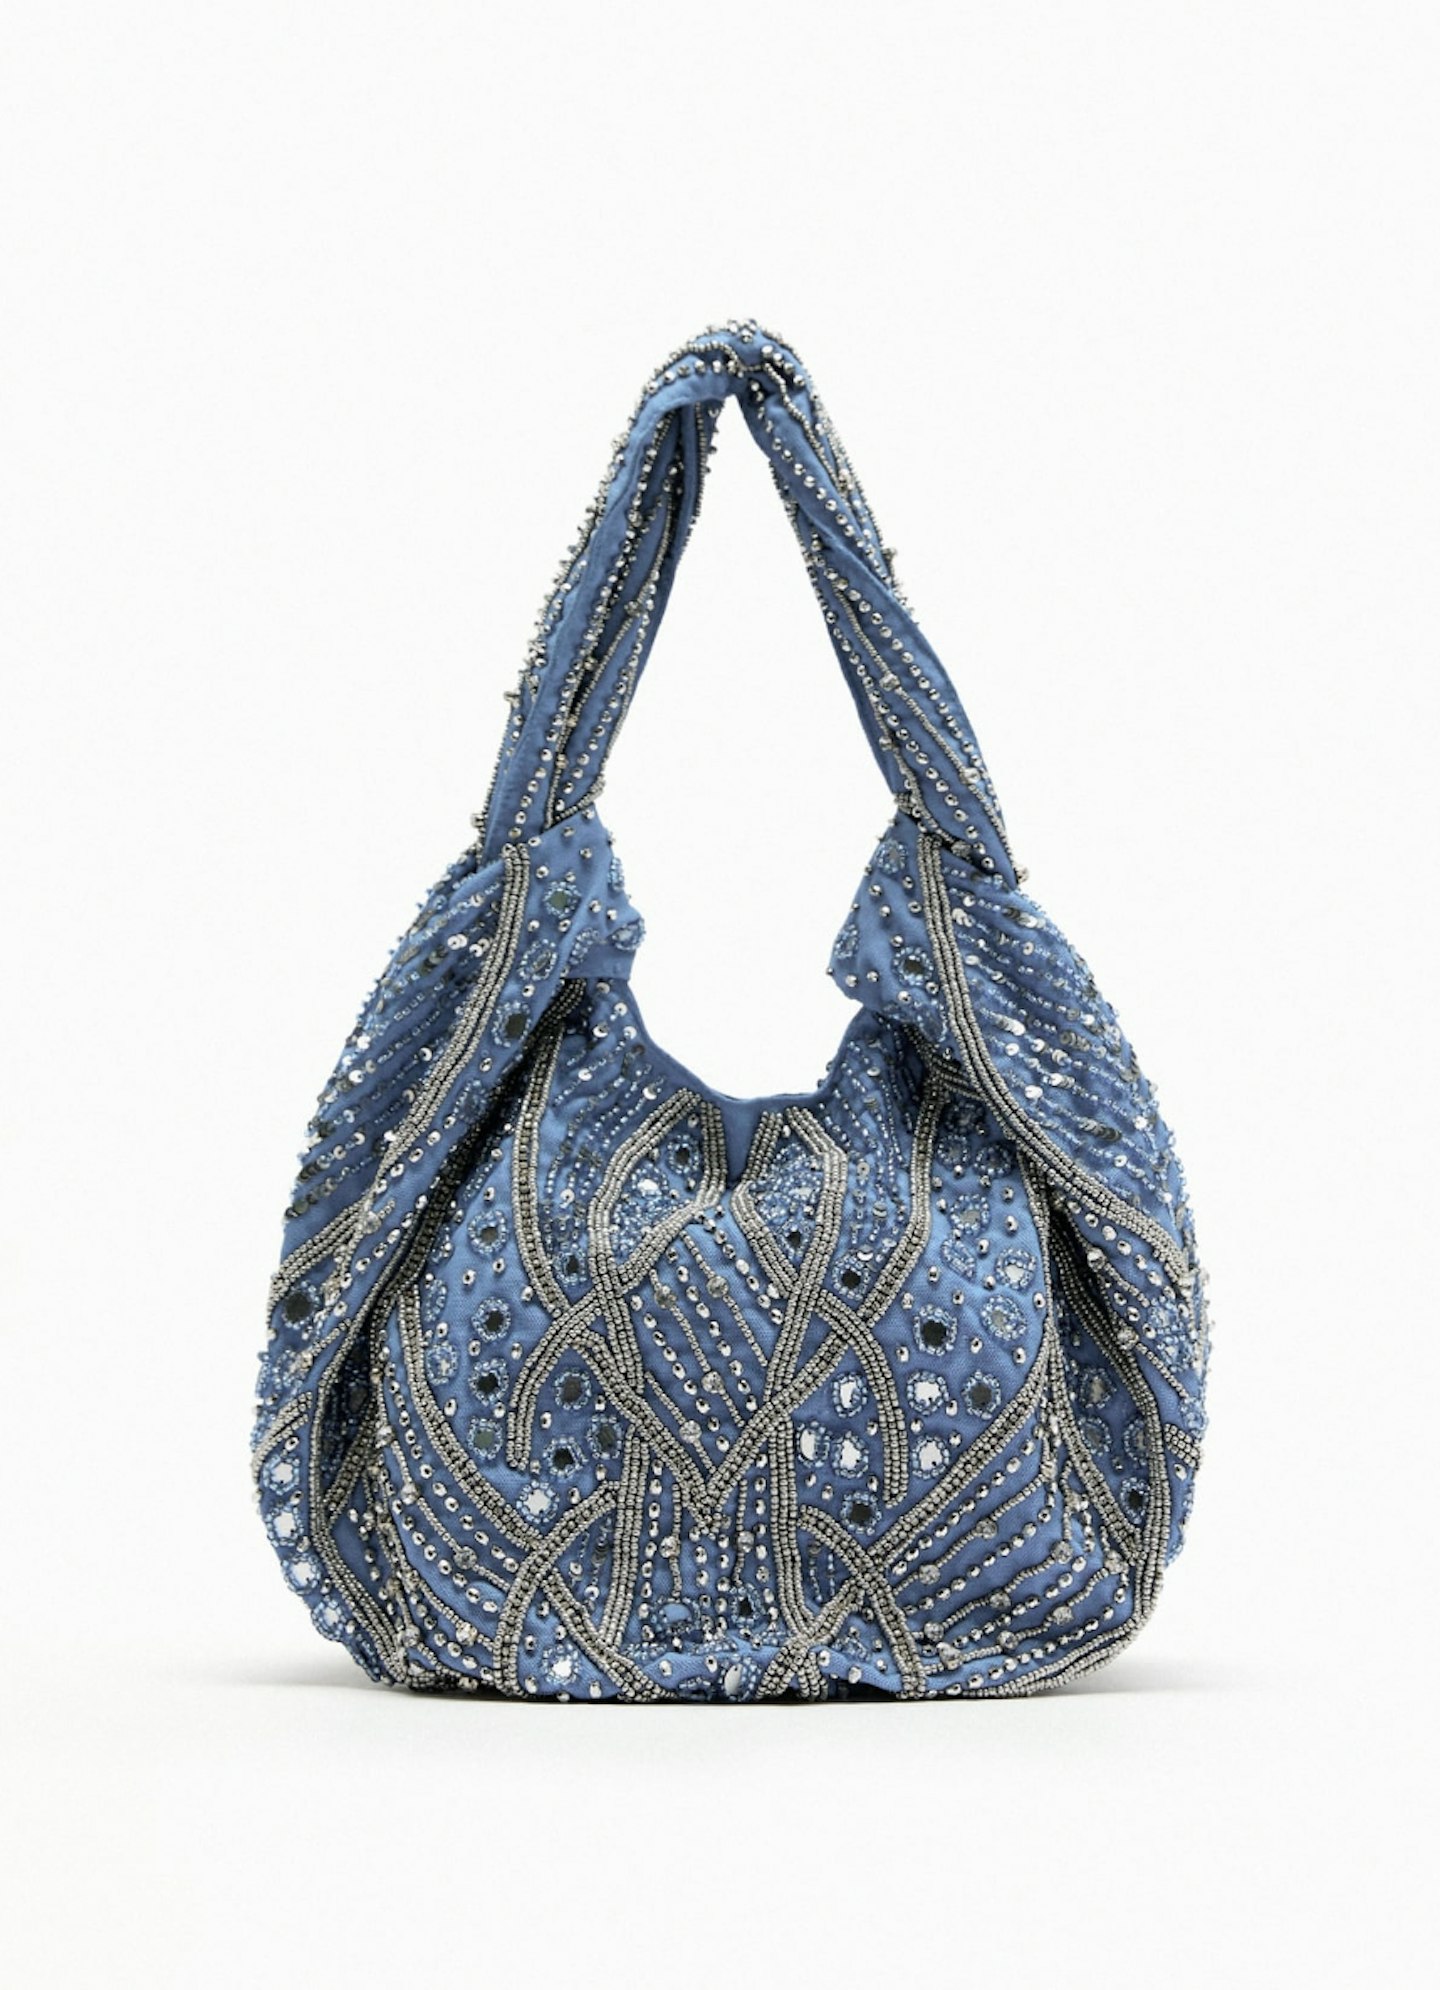 Zara Mirrored Bucket Bag